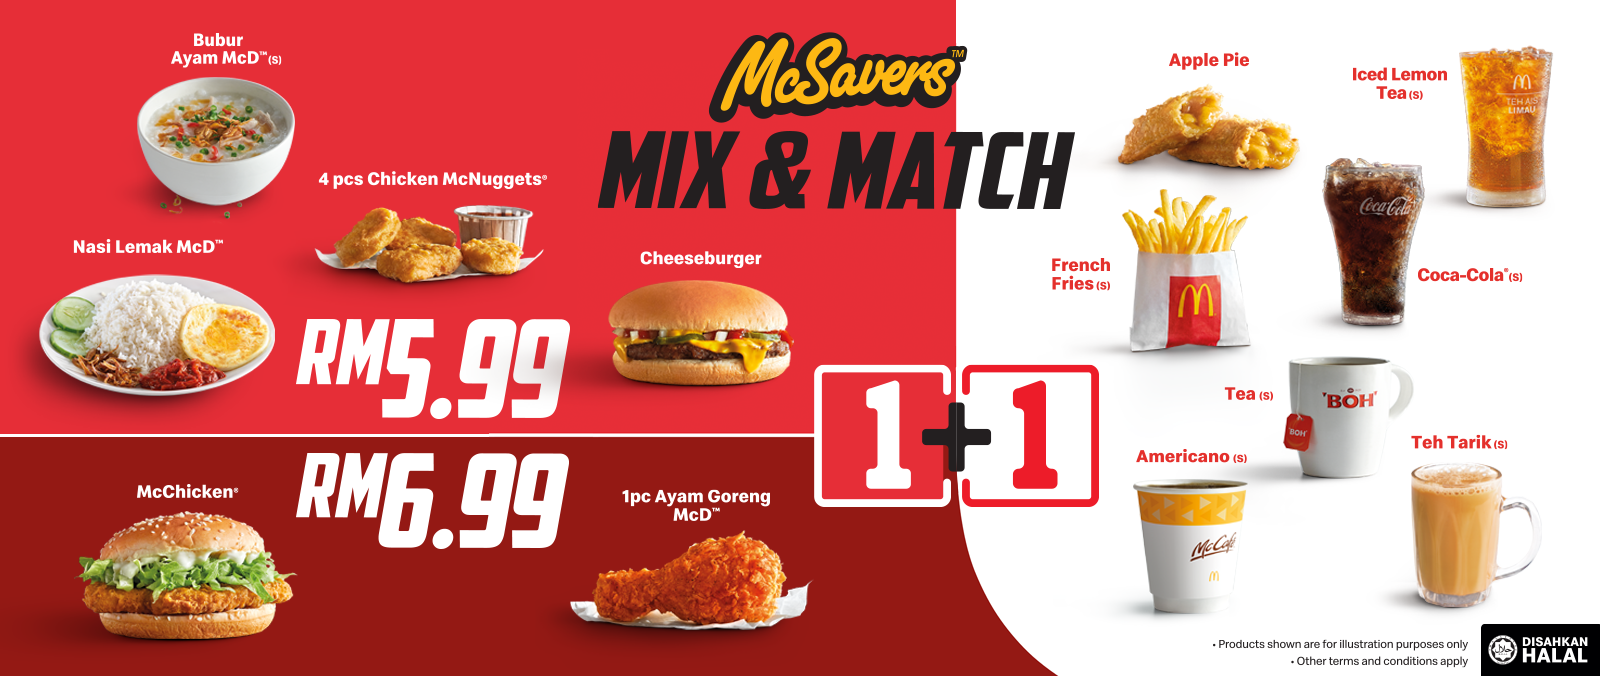 | Enjoy McSavers Mix & Match For RM5.99